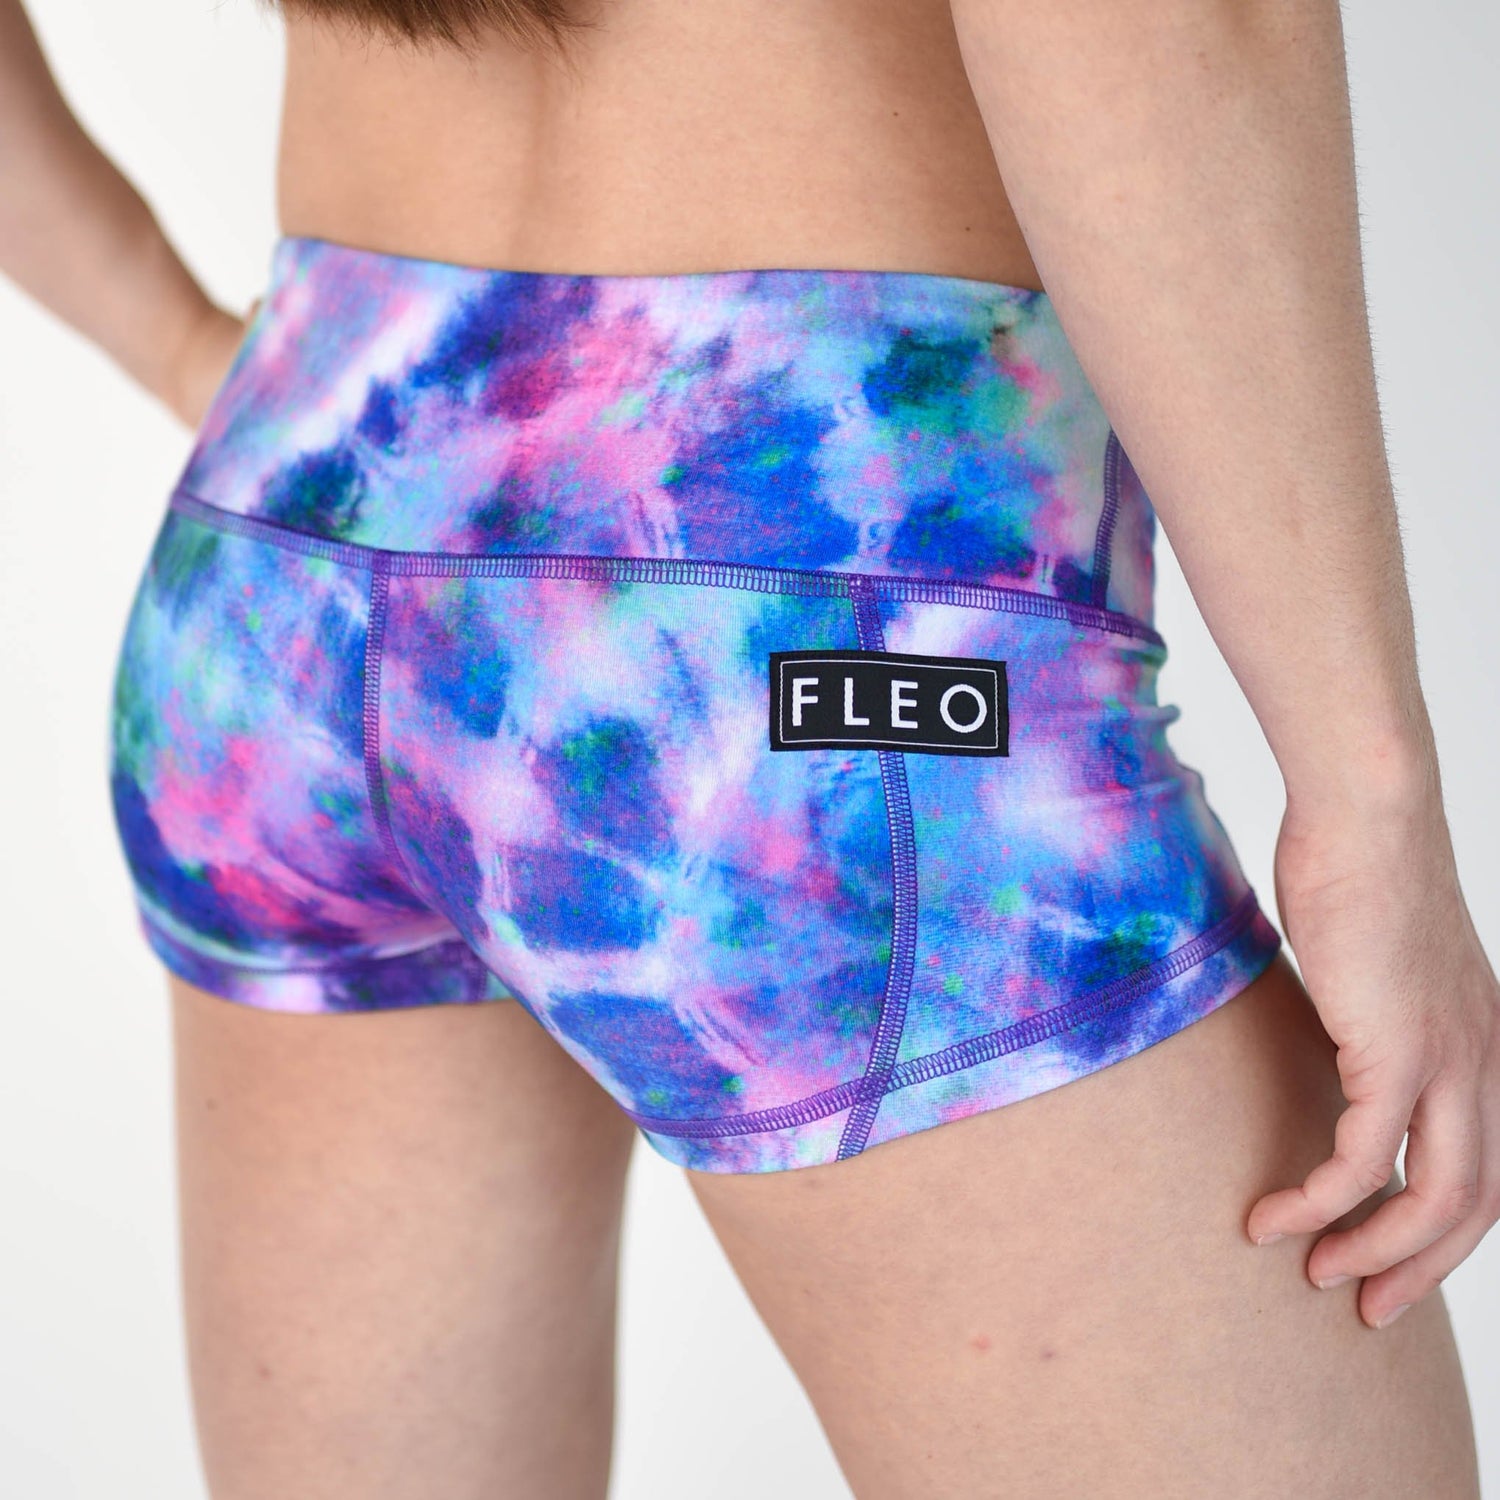 FLEO Shimmy Shimmer Shorts (Low-rise Contour) - PRE-ORDER - 9 for 9